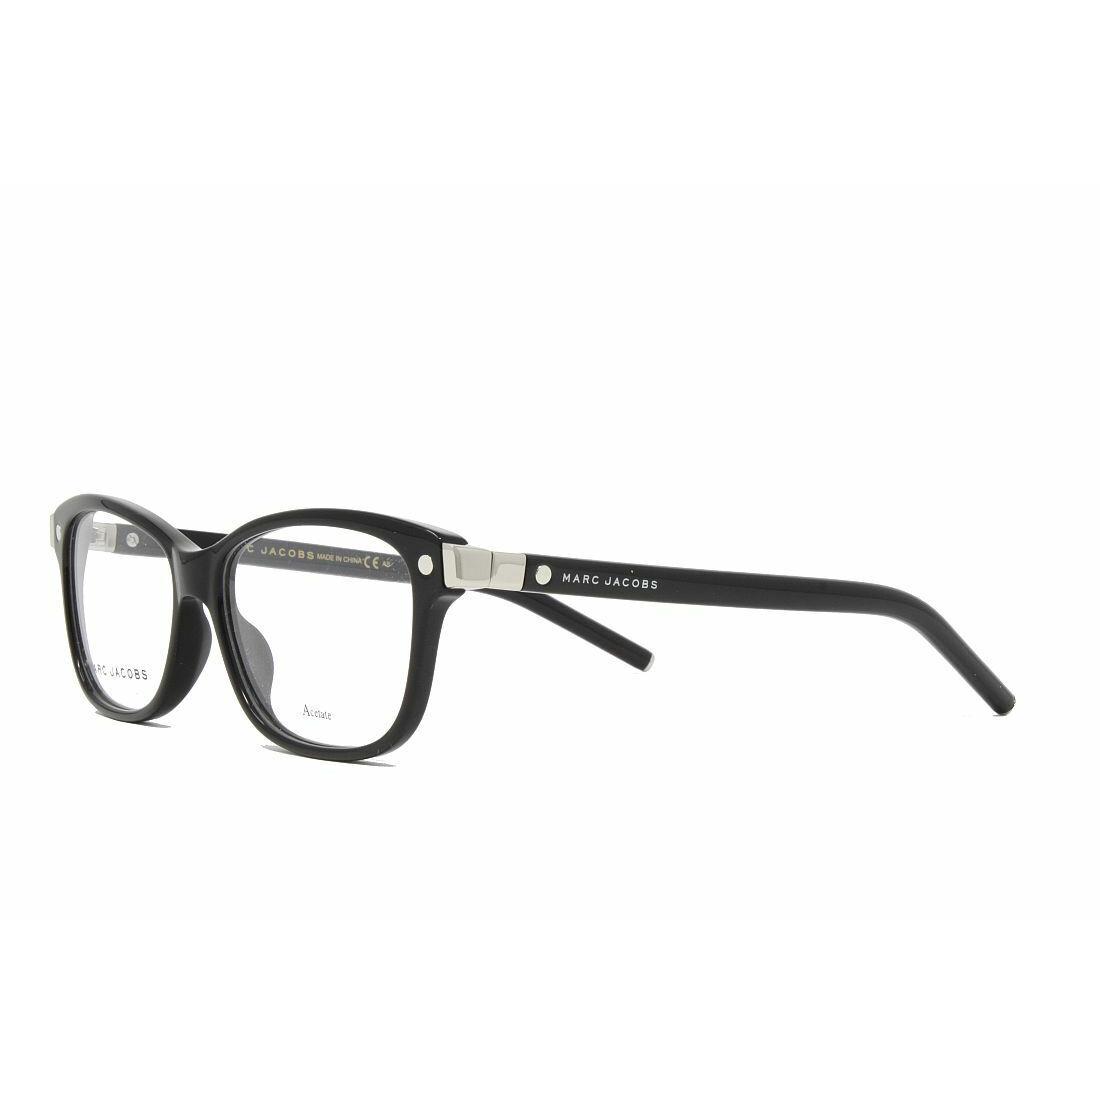 Marc Jacobs eyeglasses  - Black Frame 1